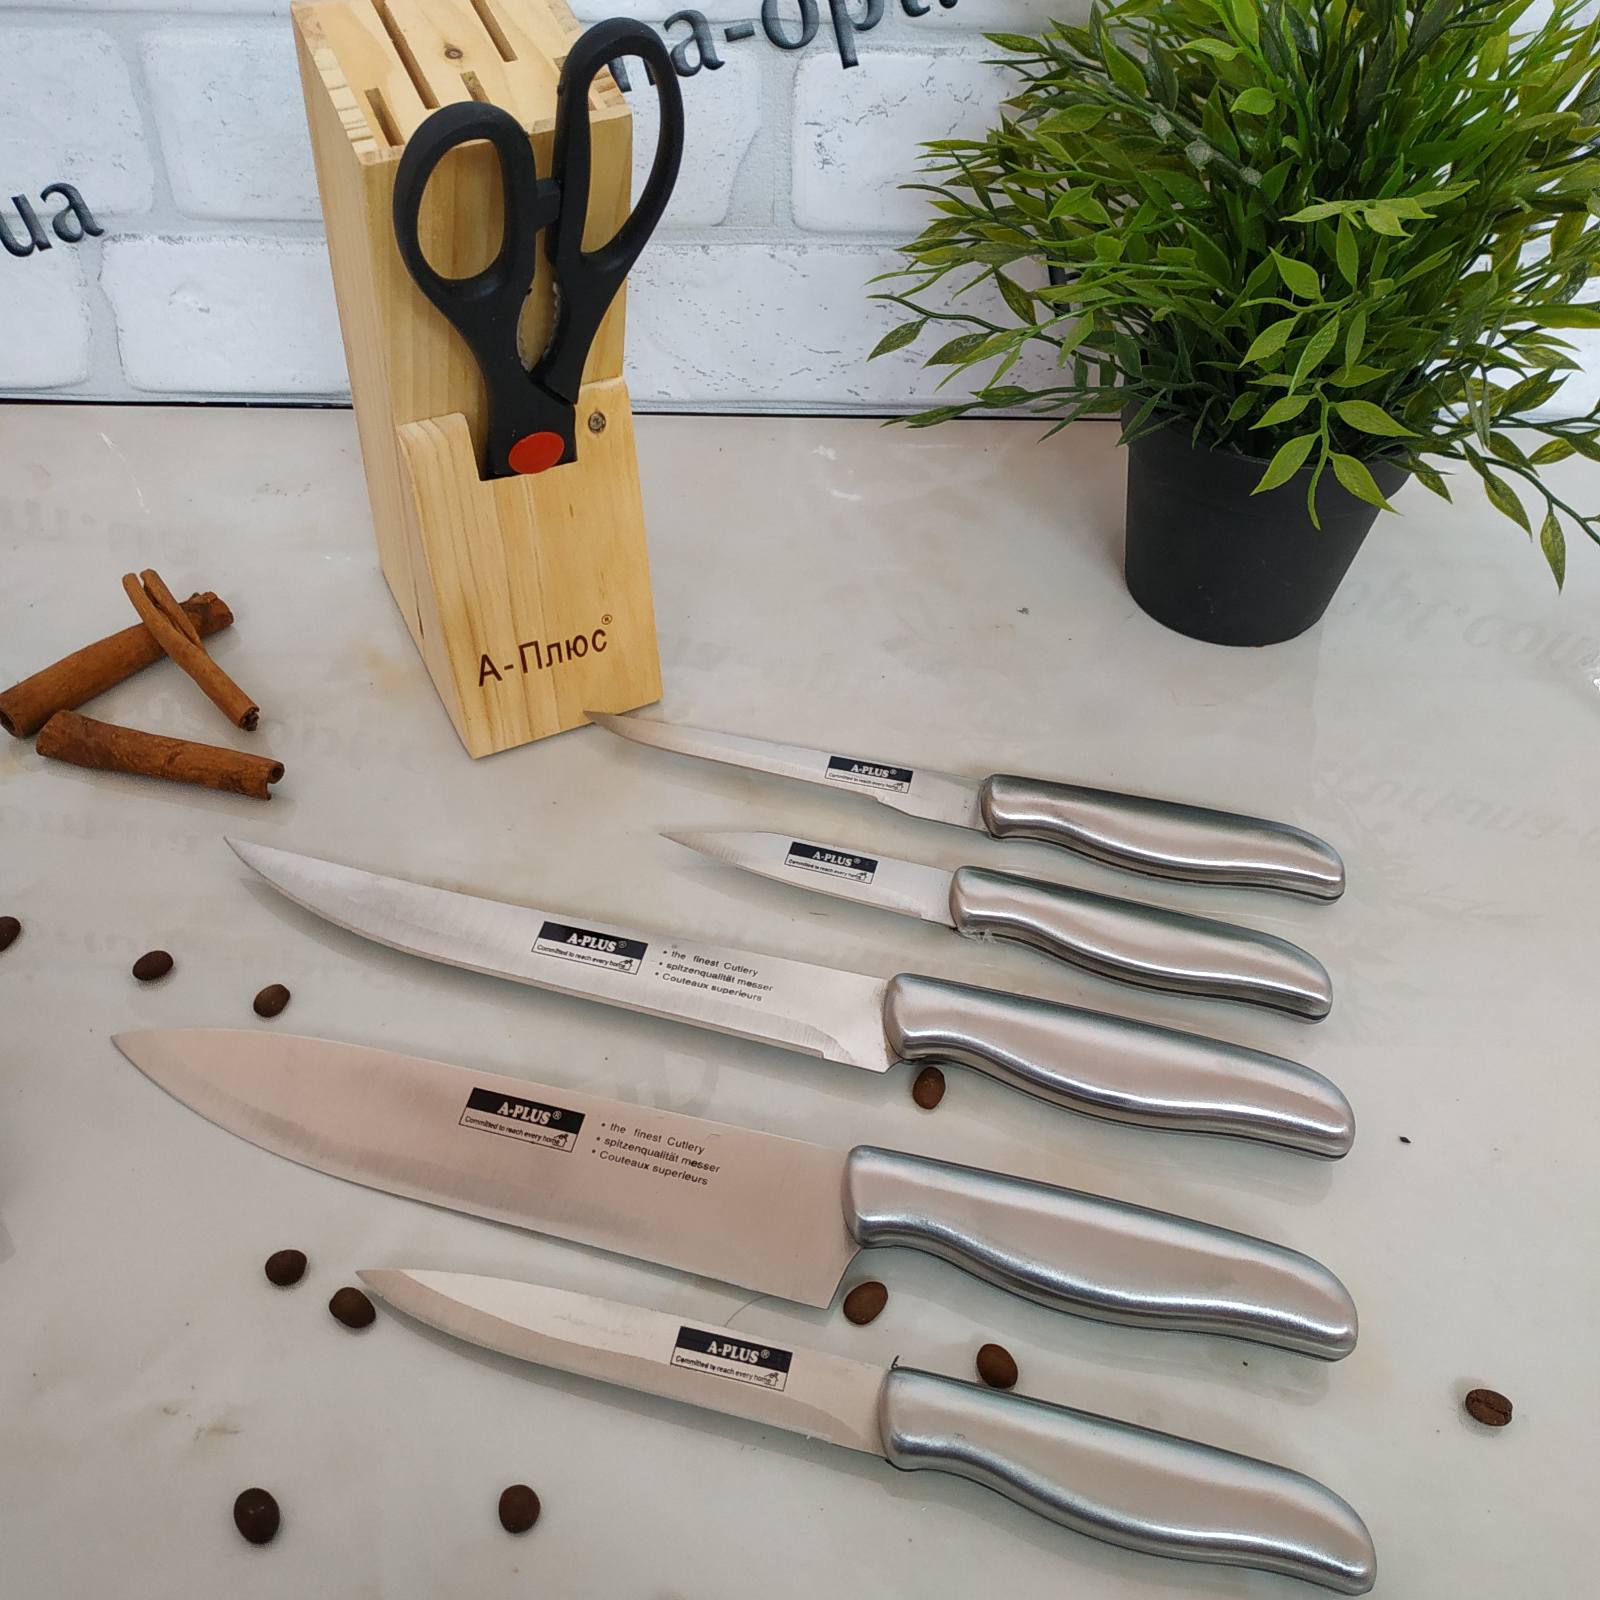 Набор ножей A-Plus - 1006 (7 предметов) ✅ базовая цена $9.54 ✔ Опт ✔ Скидки ✔ Заходите! - Интернет-магазин ✅ Фортуна-опт ✅